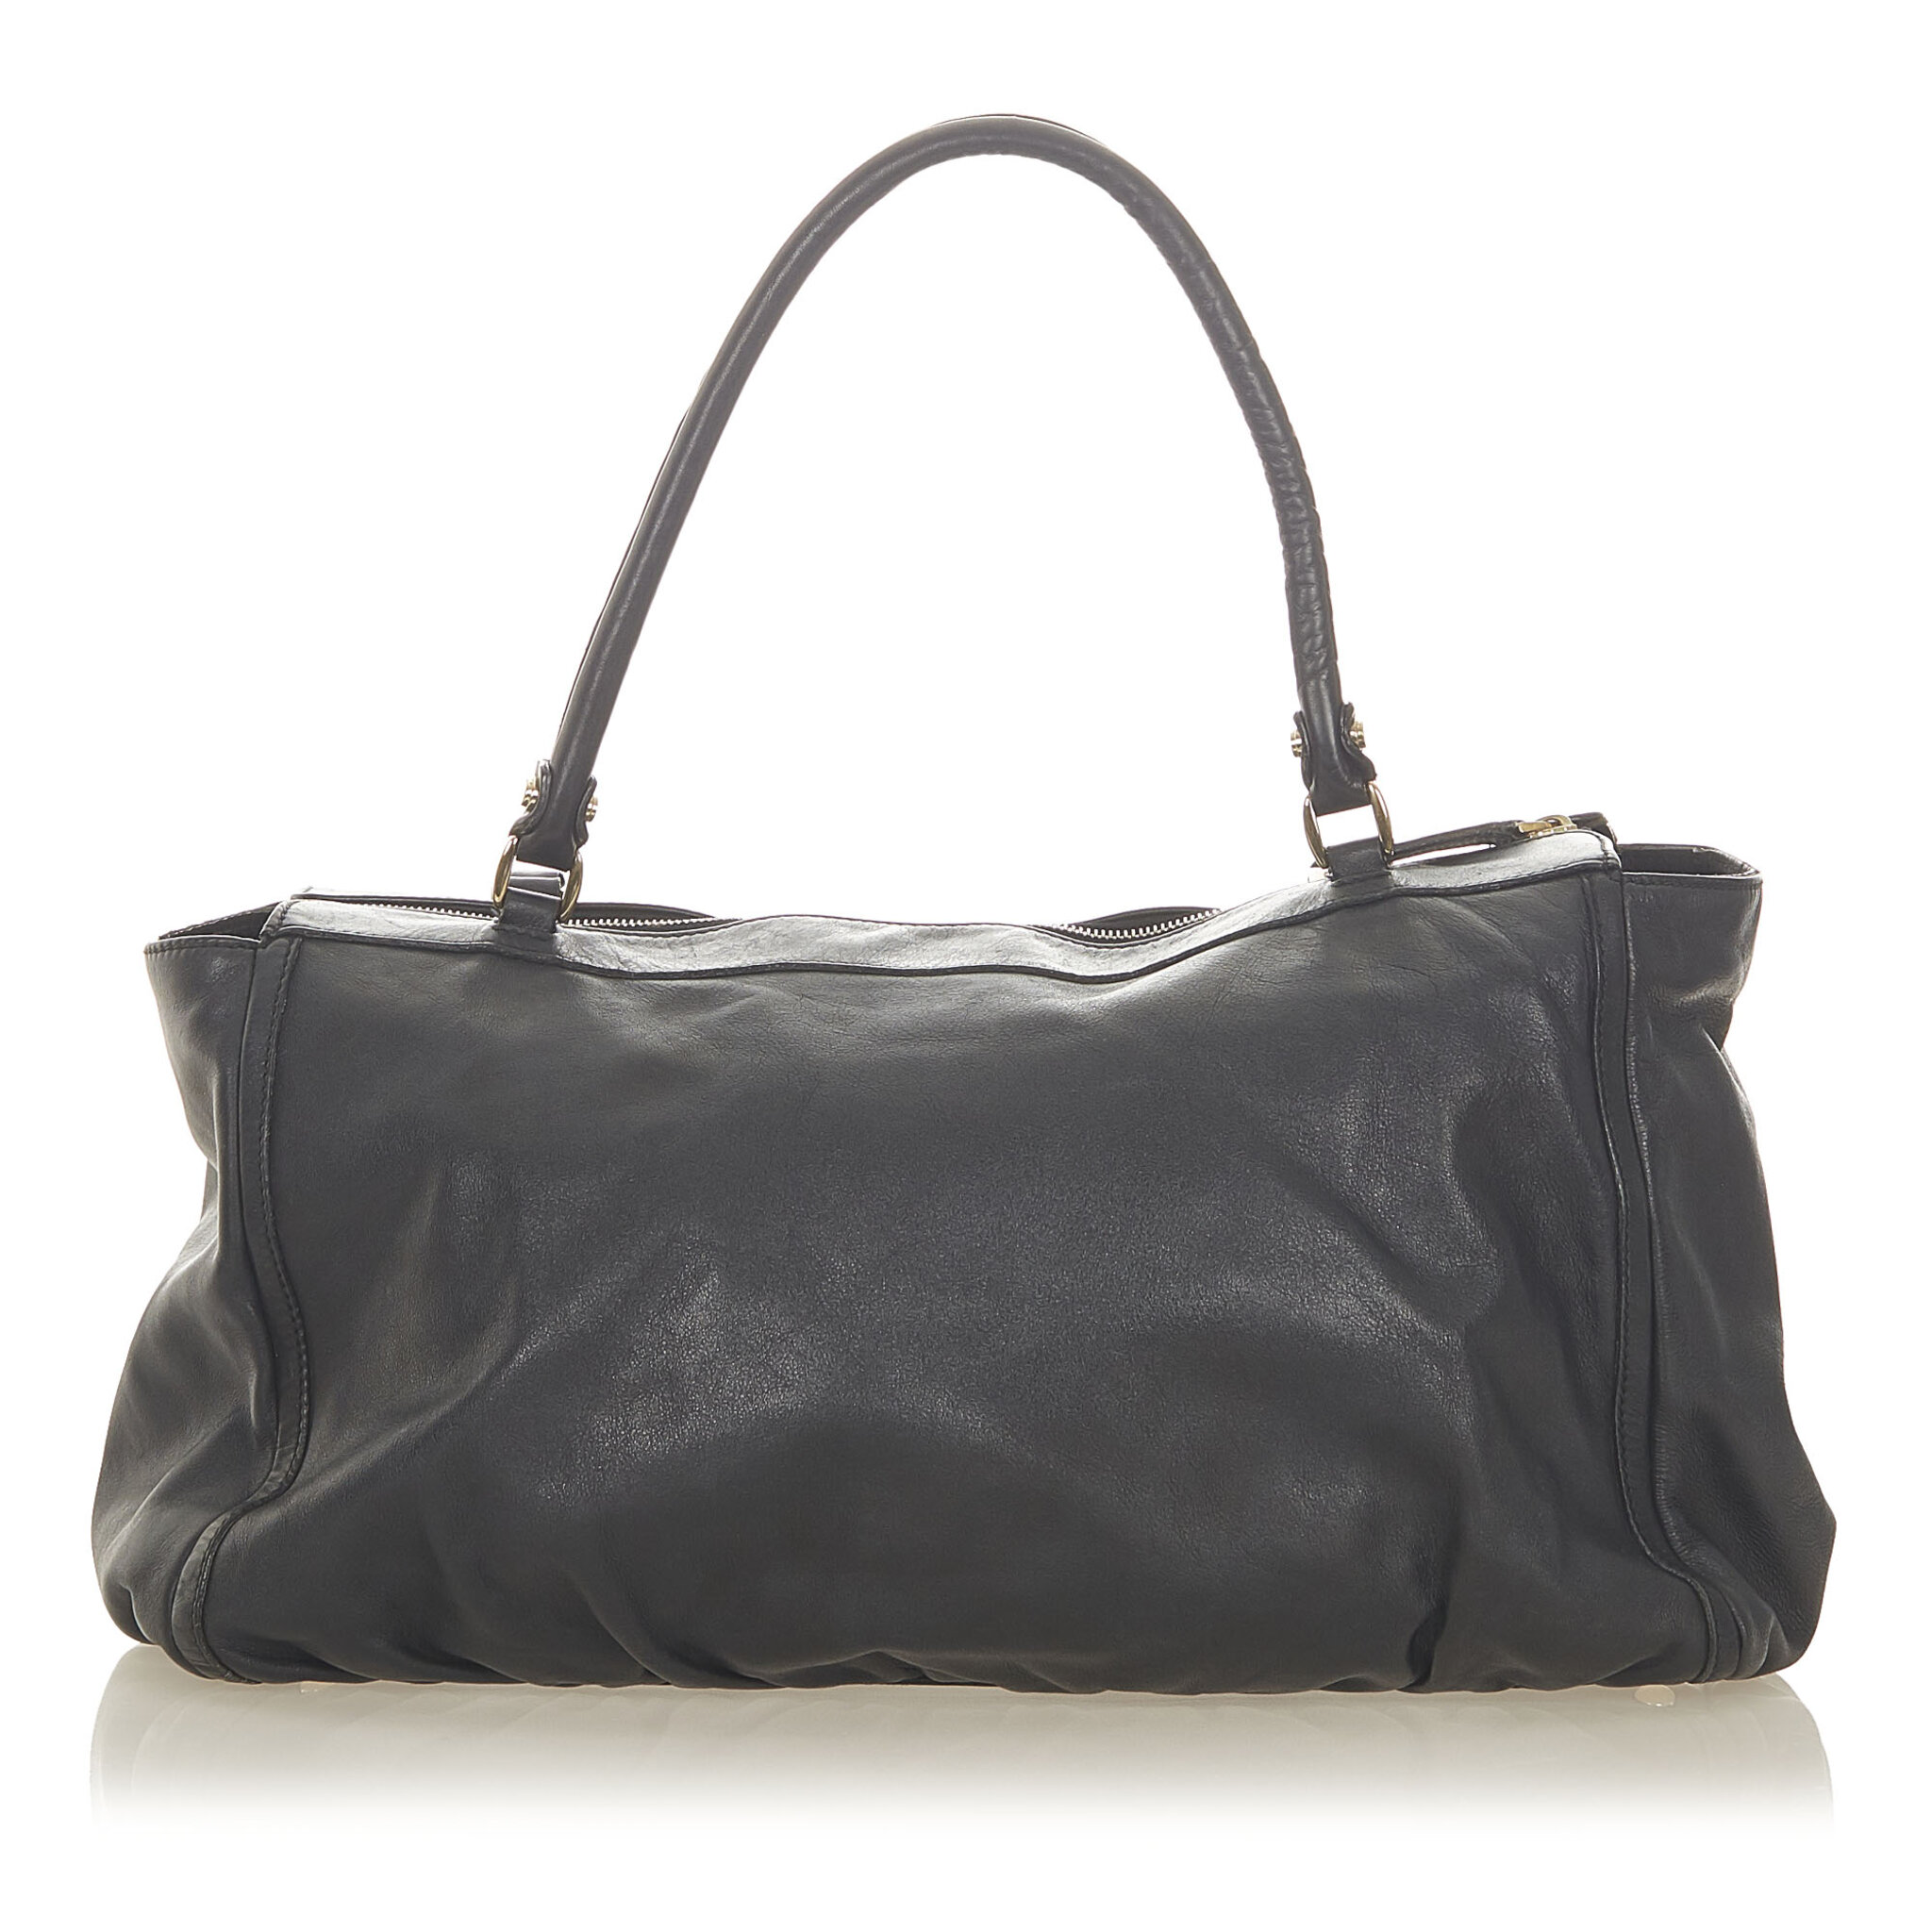 Gucci Abbey D-ring Leather Shoulder Bag, black